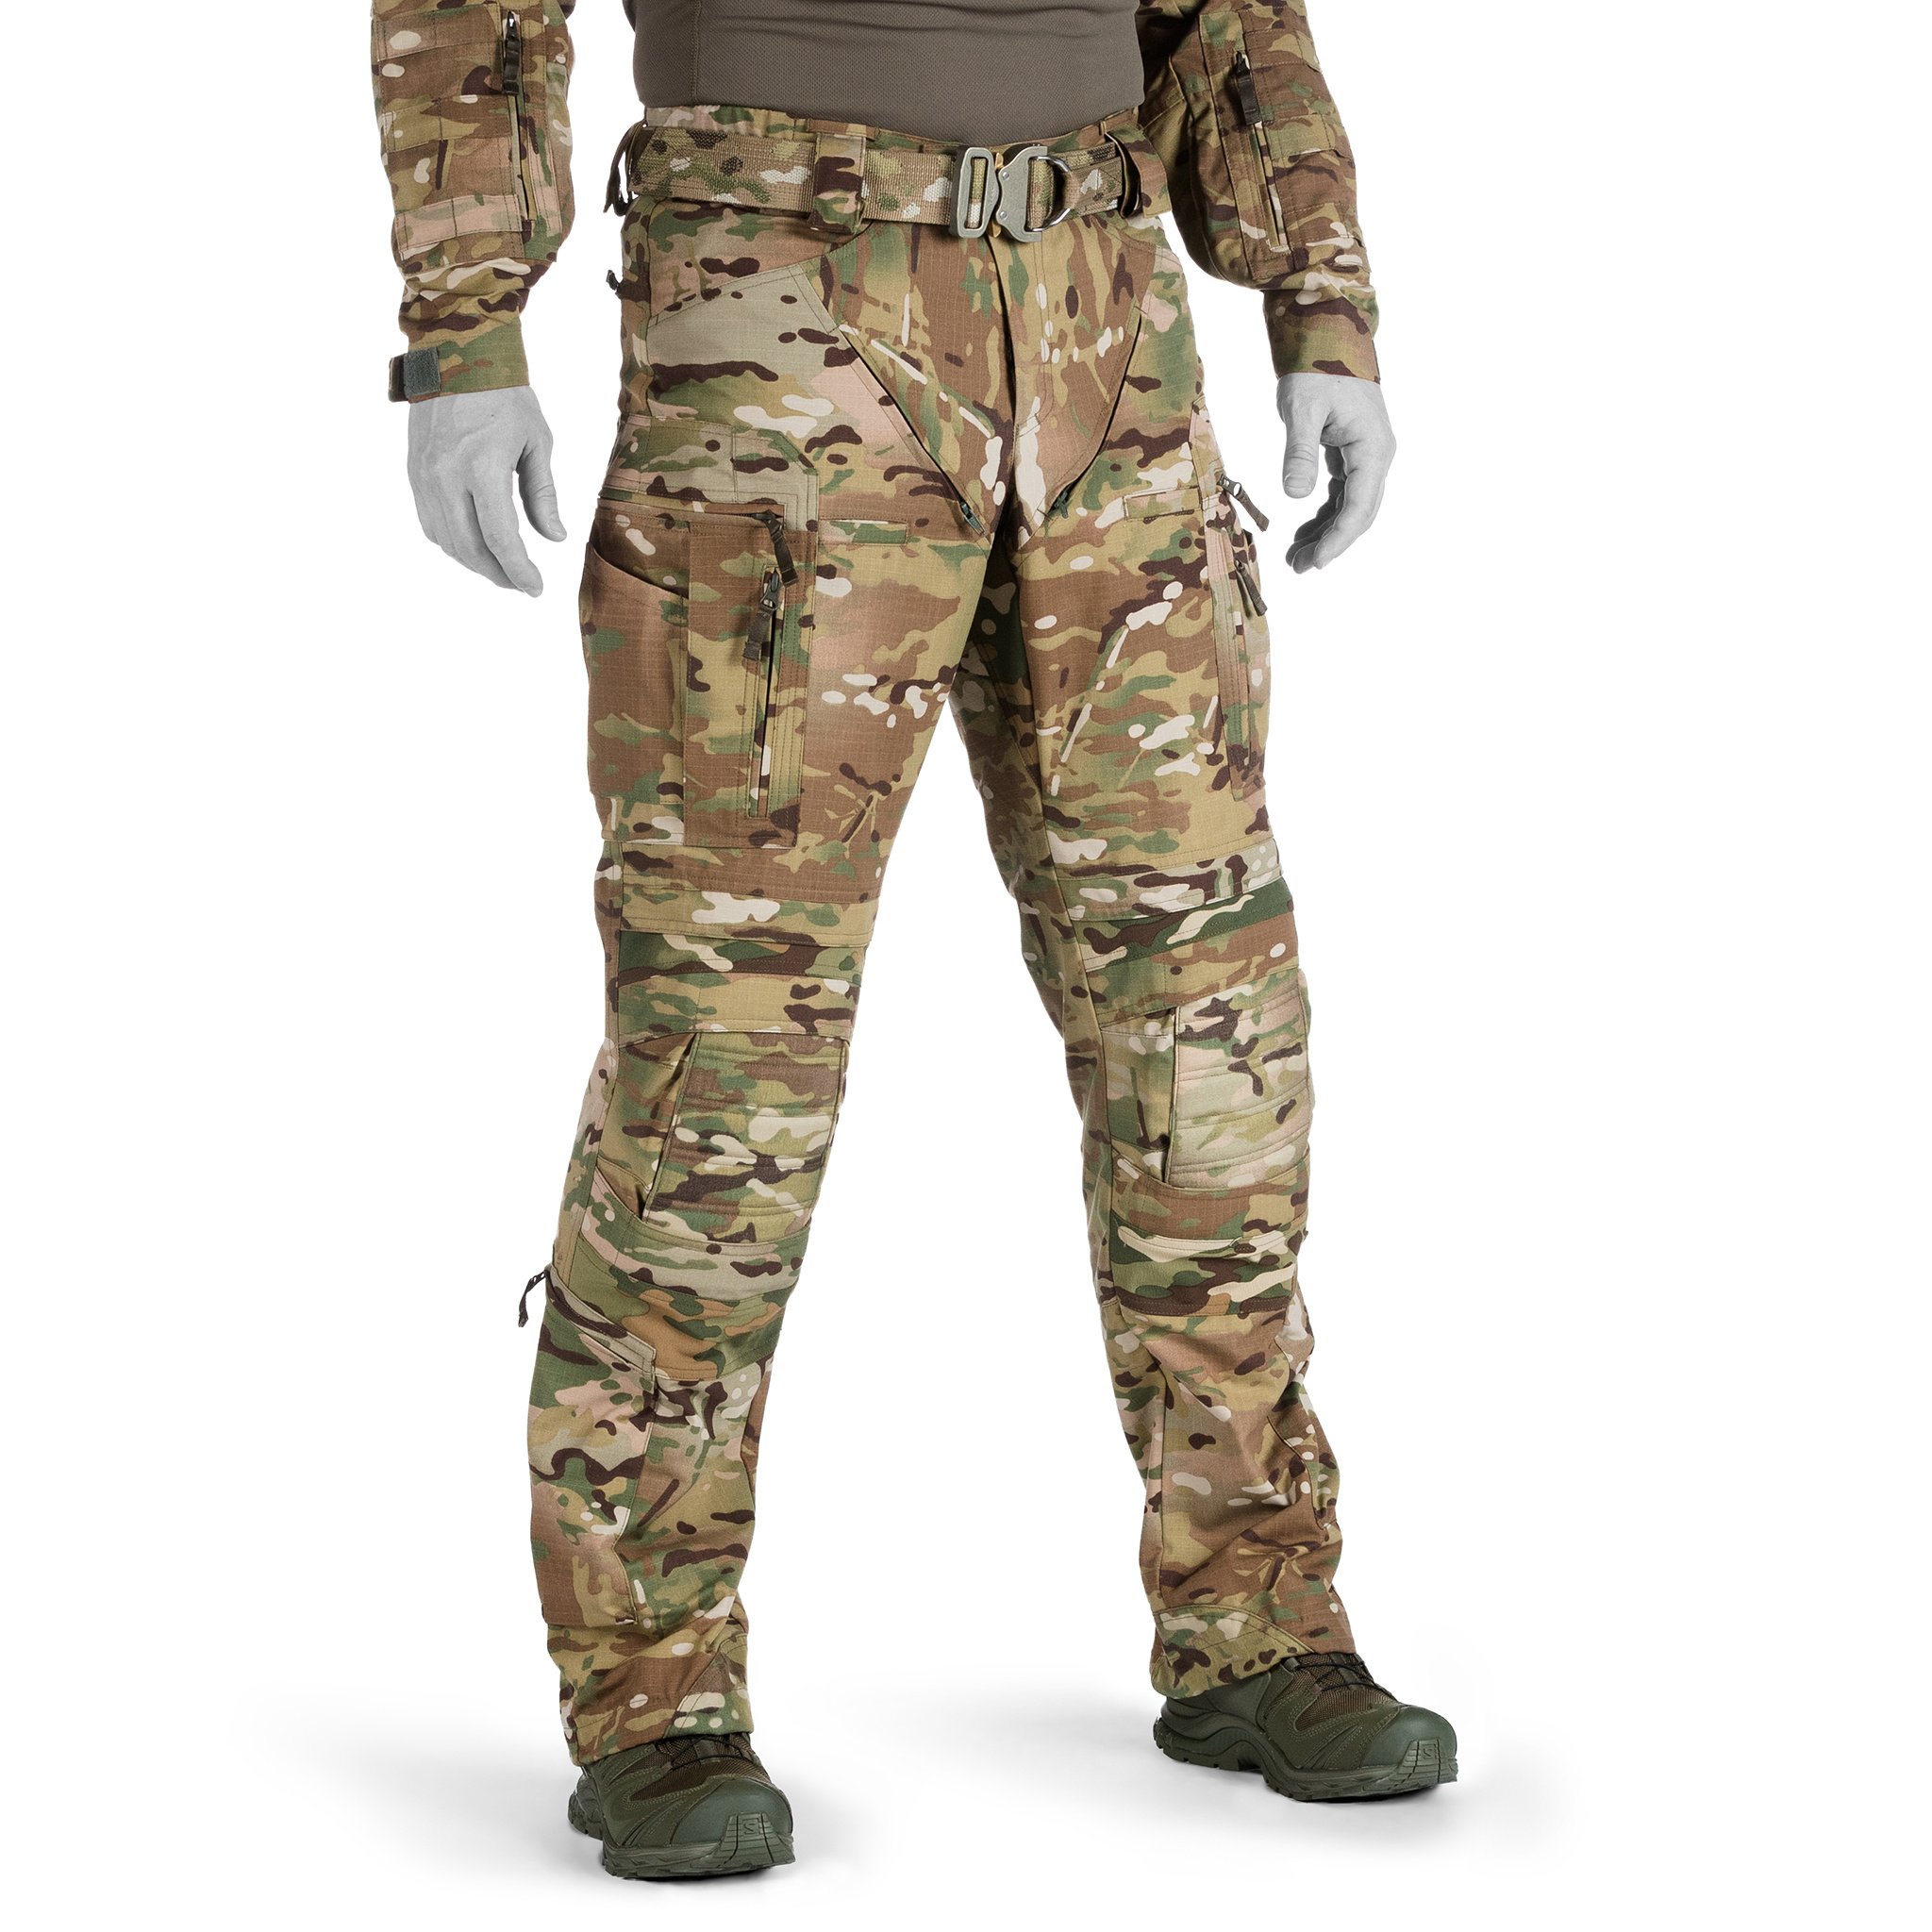 UFPRO Striker HT Combat Pants Multicamhope